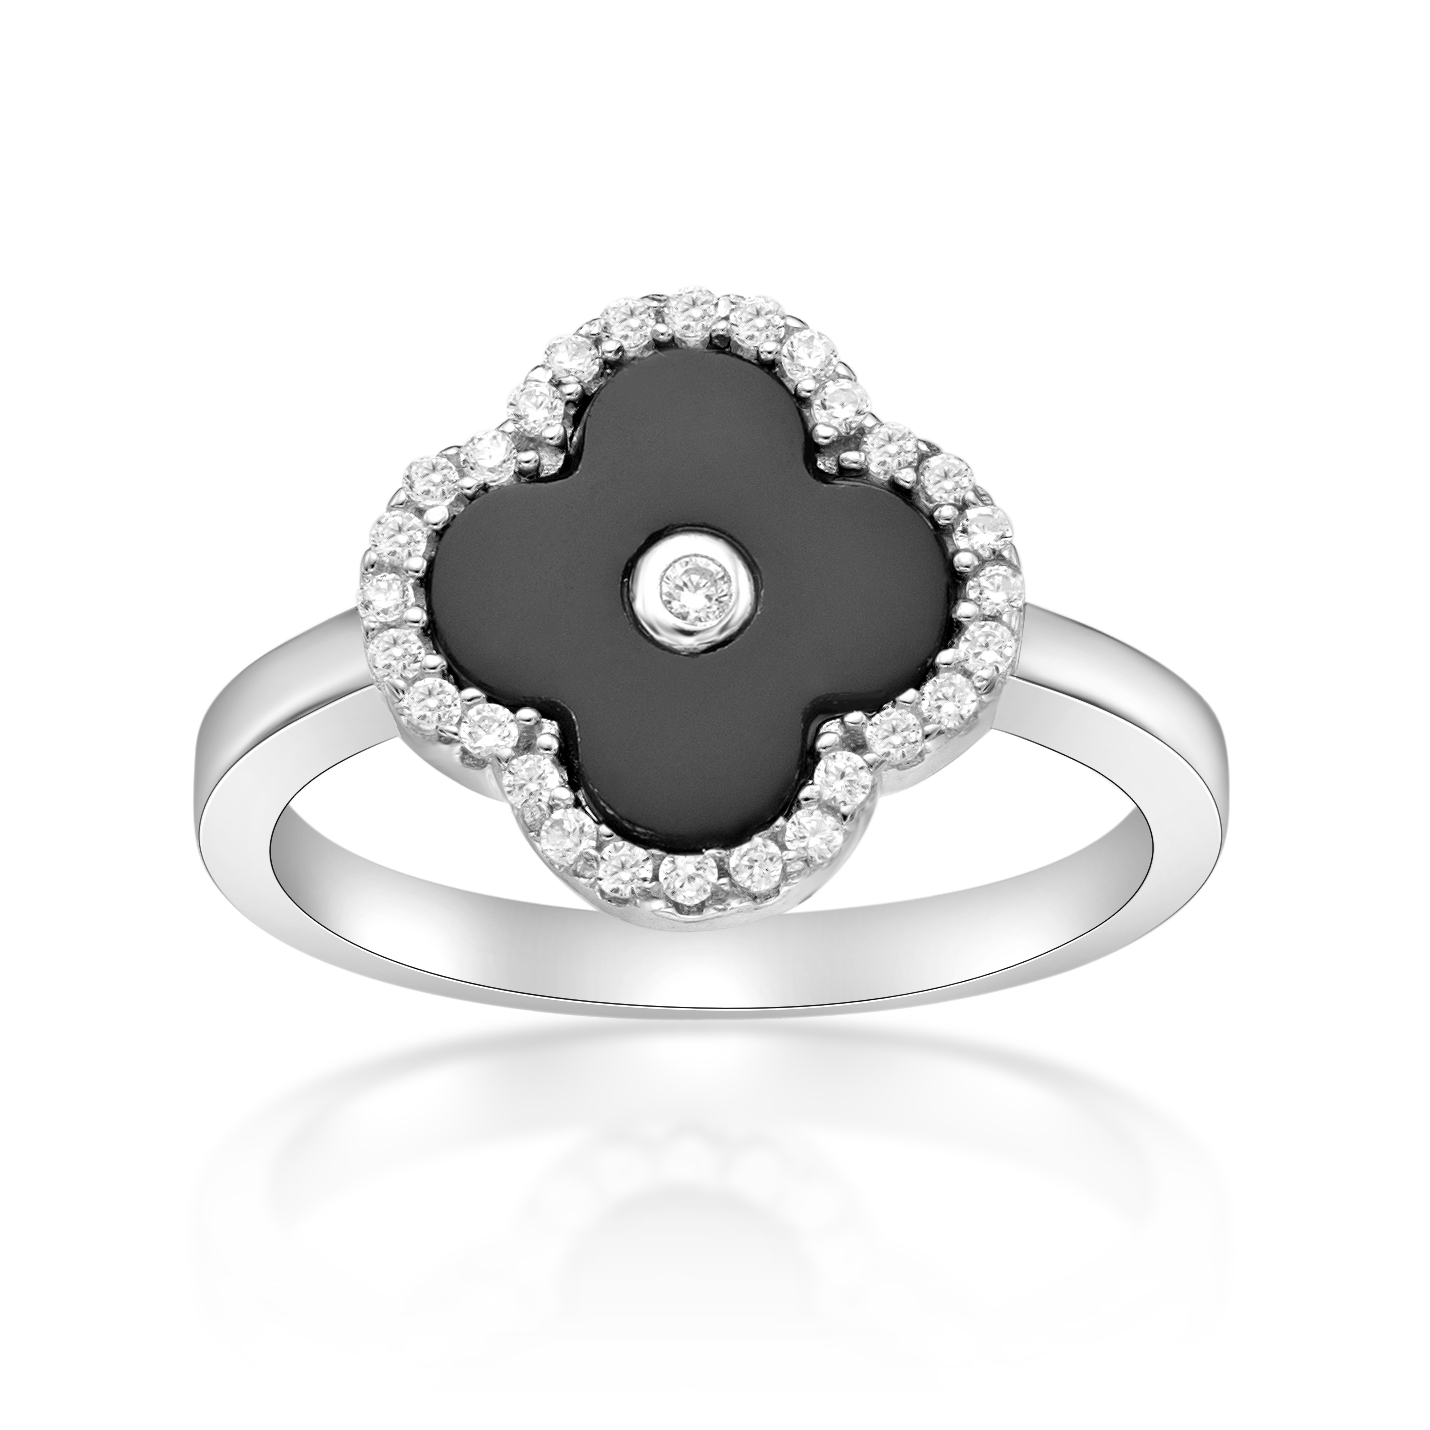 Lavari Jewelers Women’s Black Onyx Flower Ring, 925 Sterling Silver, Cubic Zirconia, Size 8